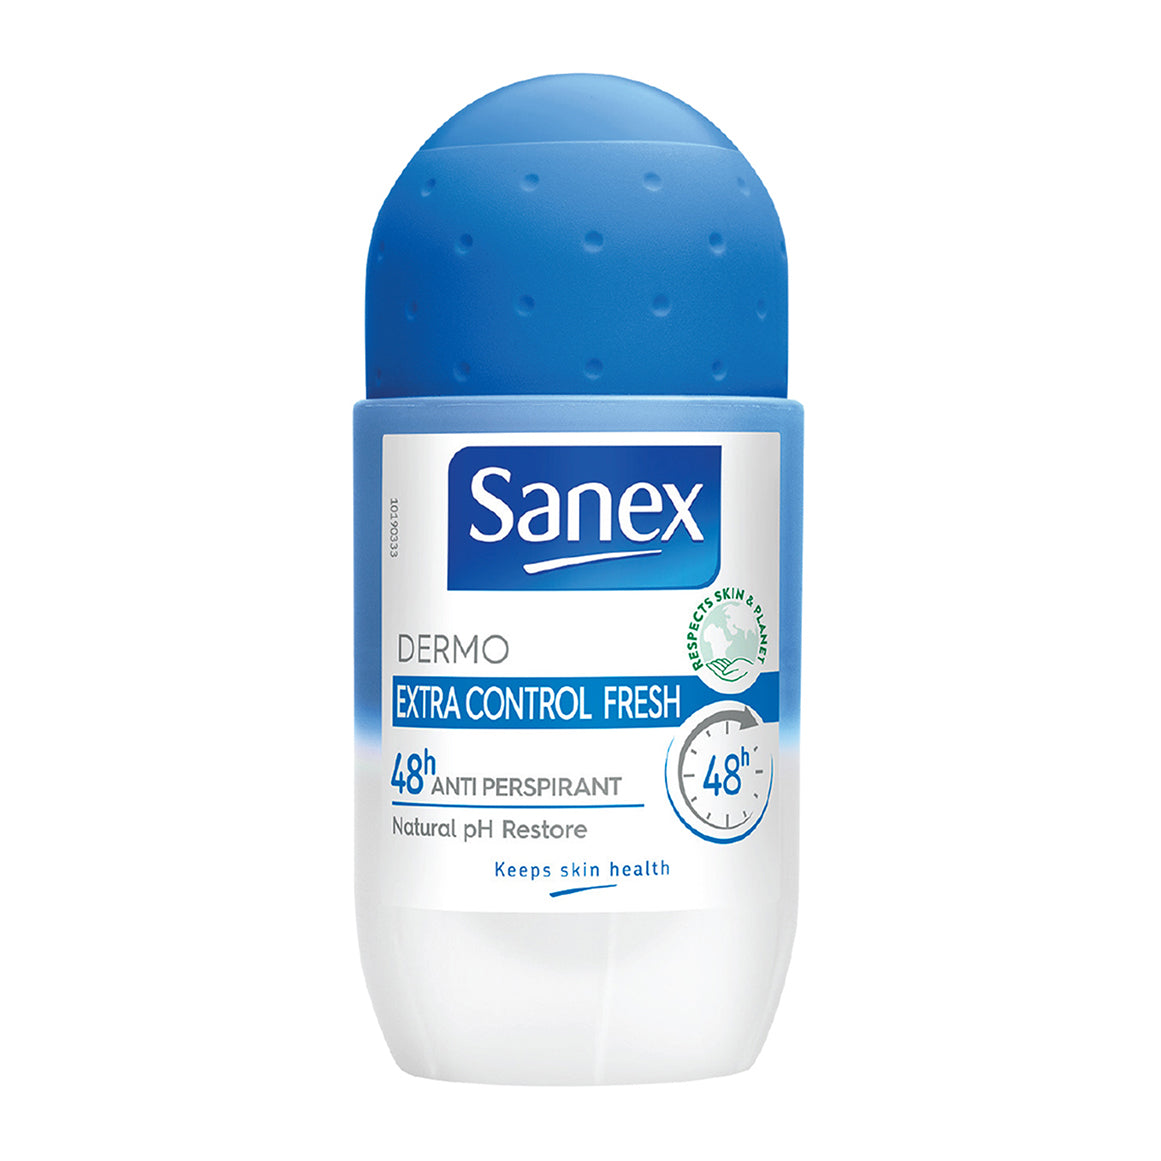 SANEX Roll-on Deodorant Dermo Sensitive Skin control 50ml -J90